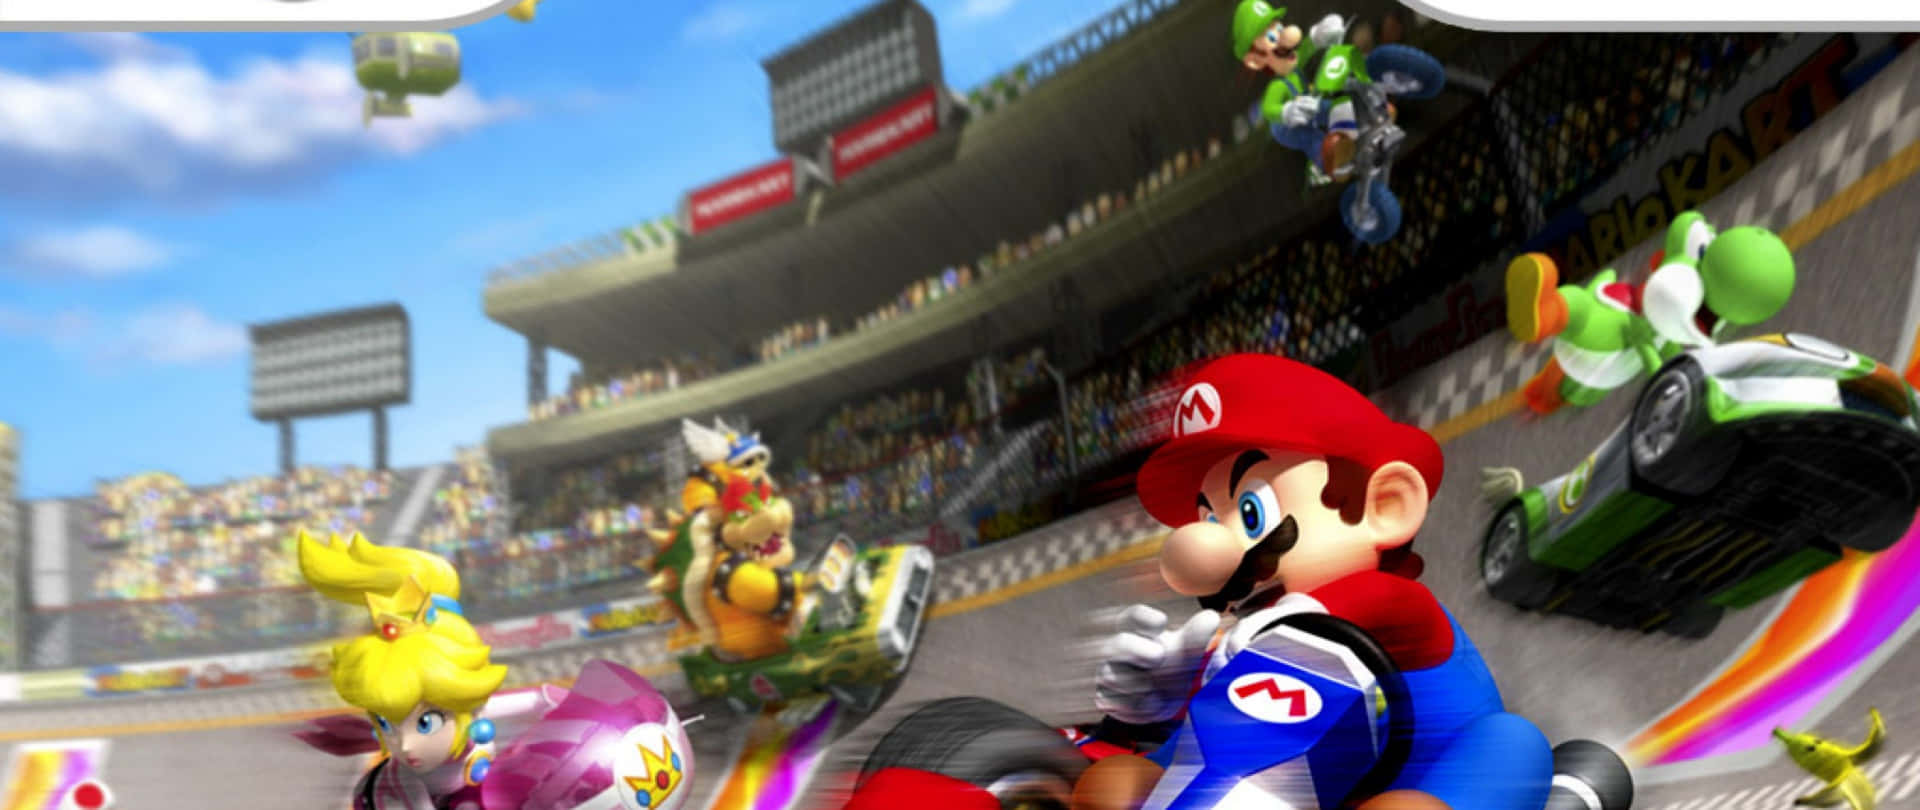 Sjovtog Hurtigt! Bli Med I Kapløbet Med Mario Kart!